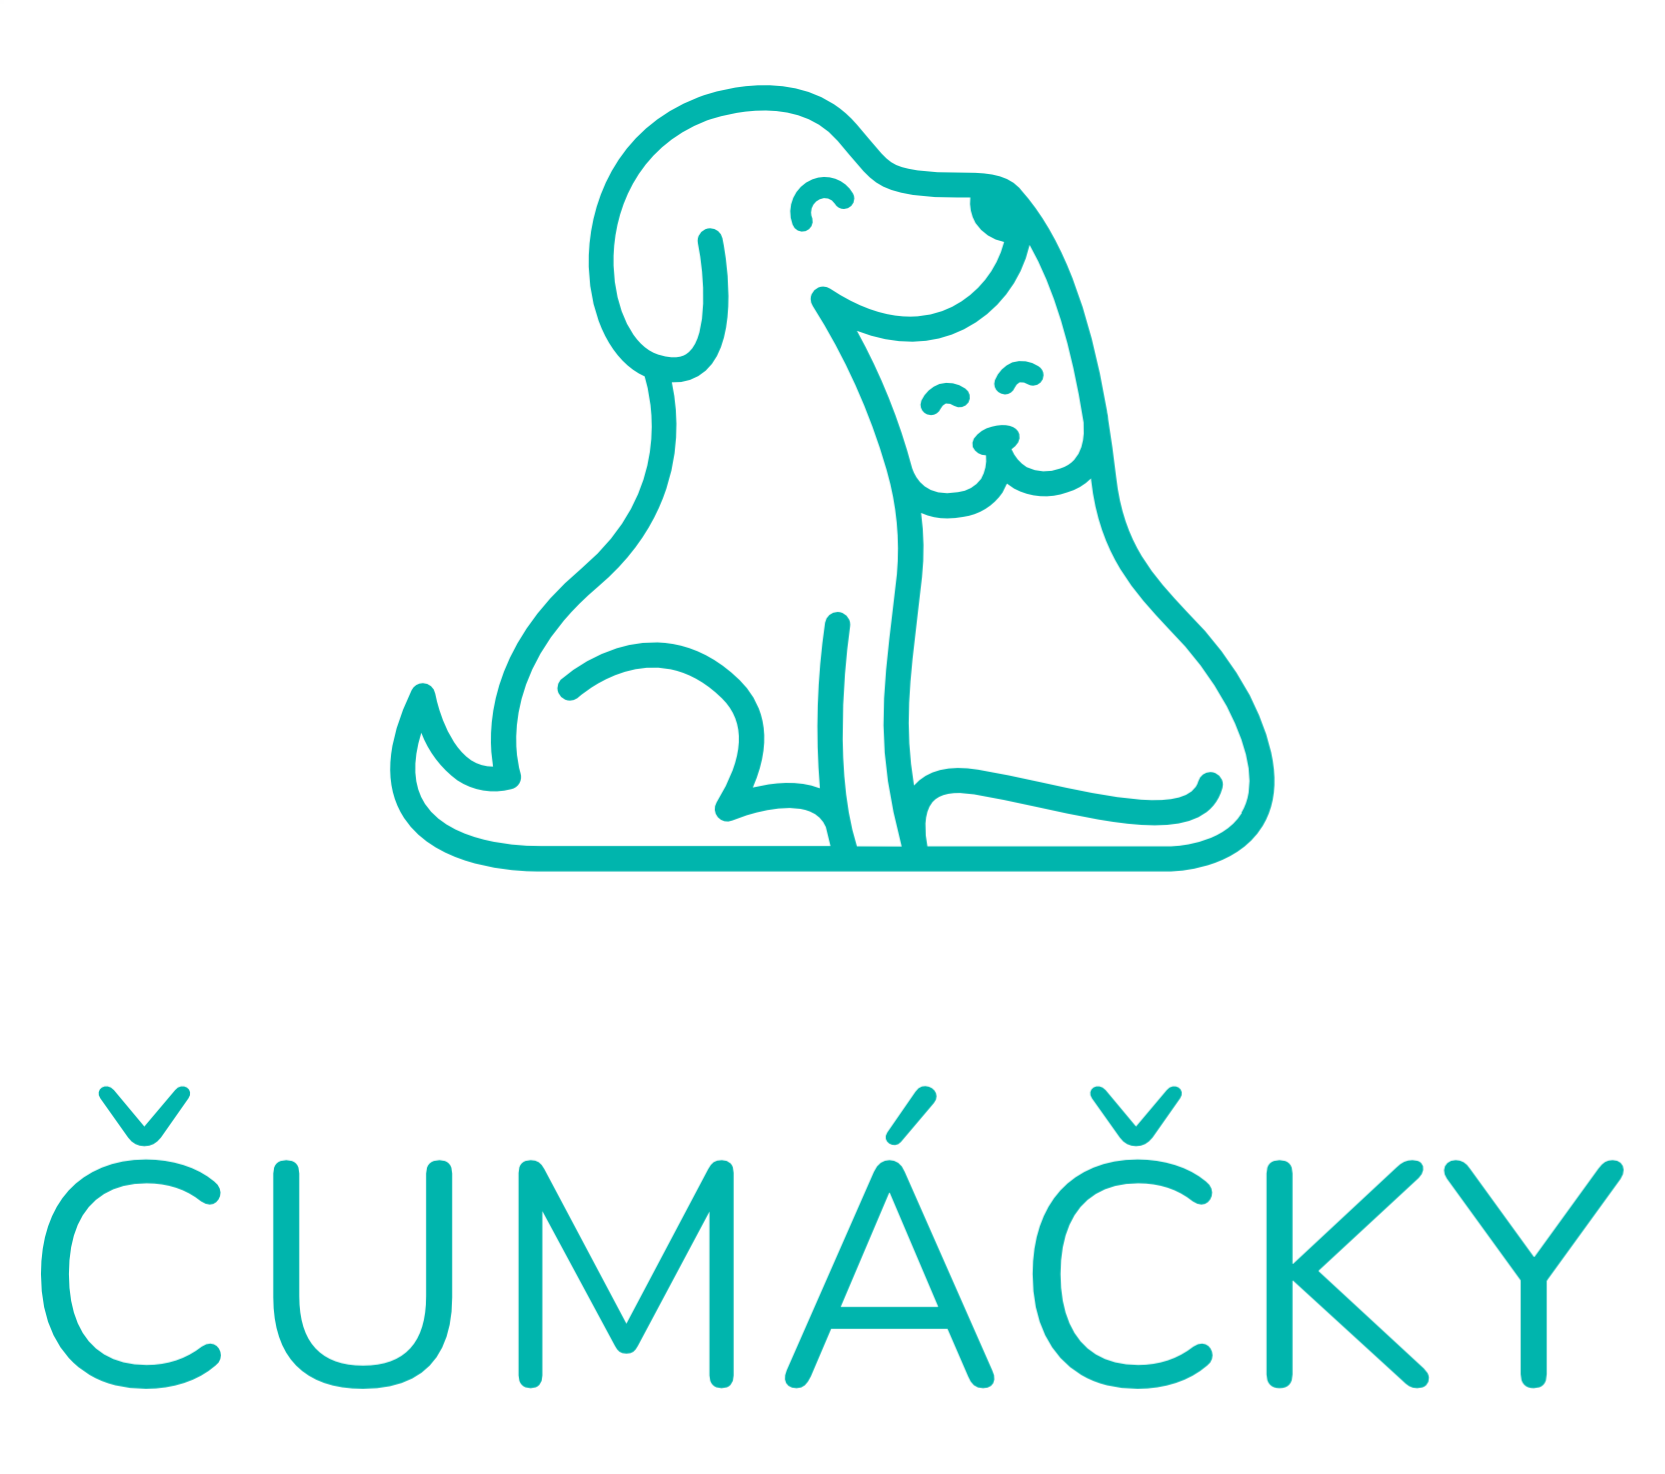 Cumacky